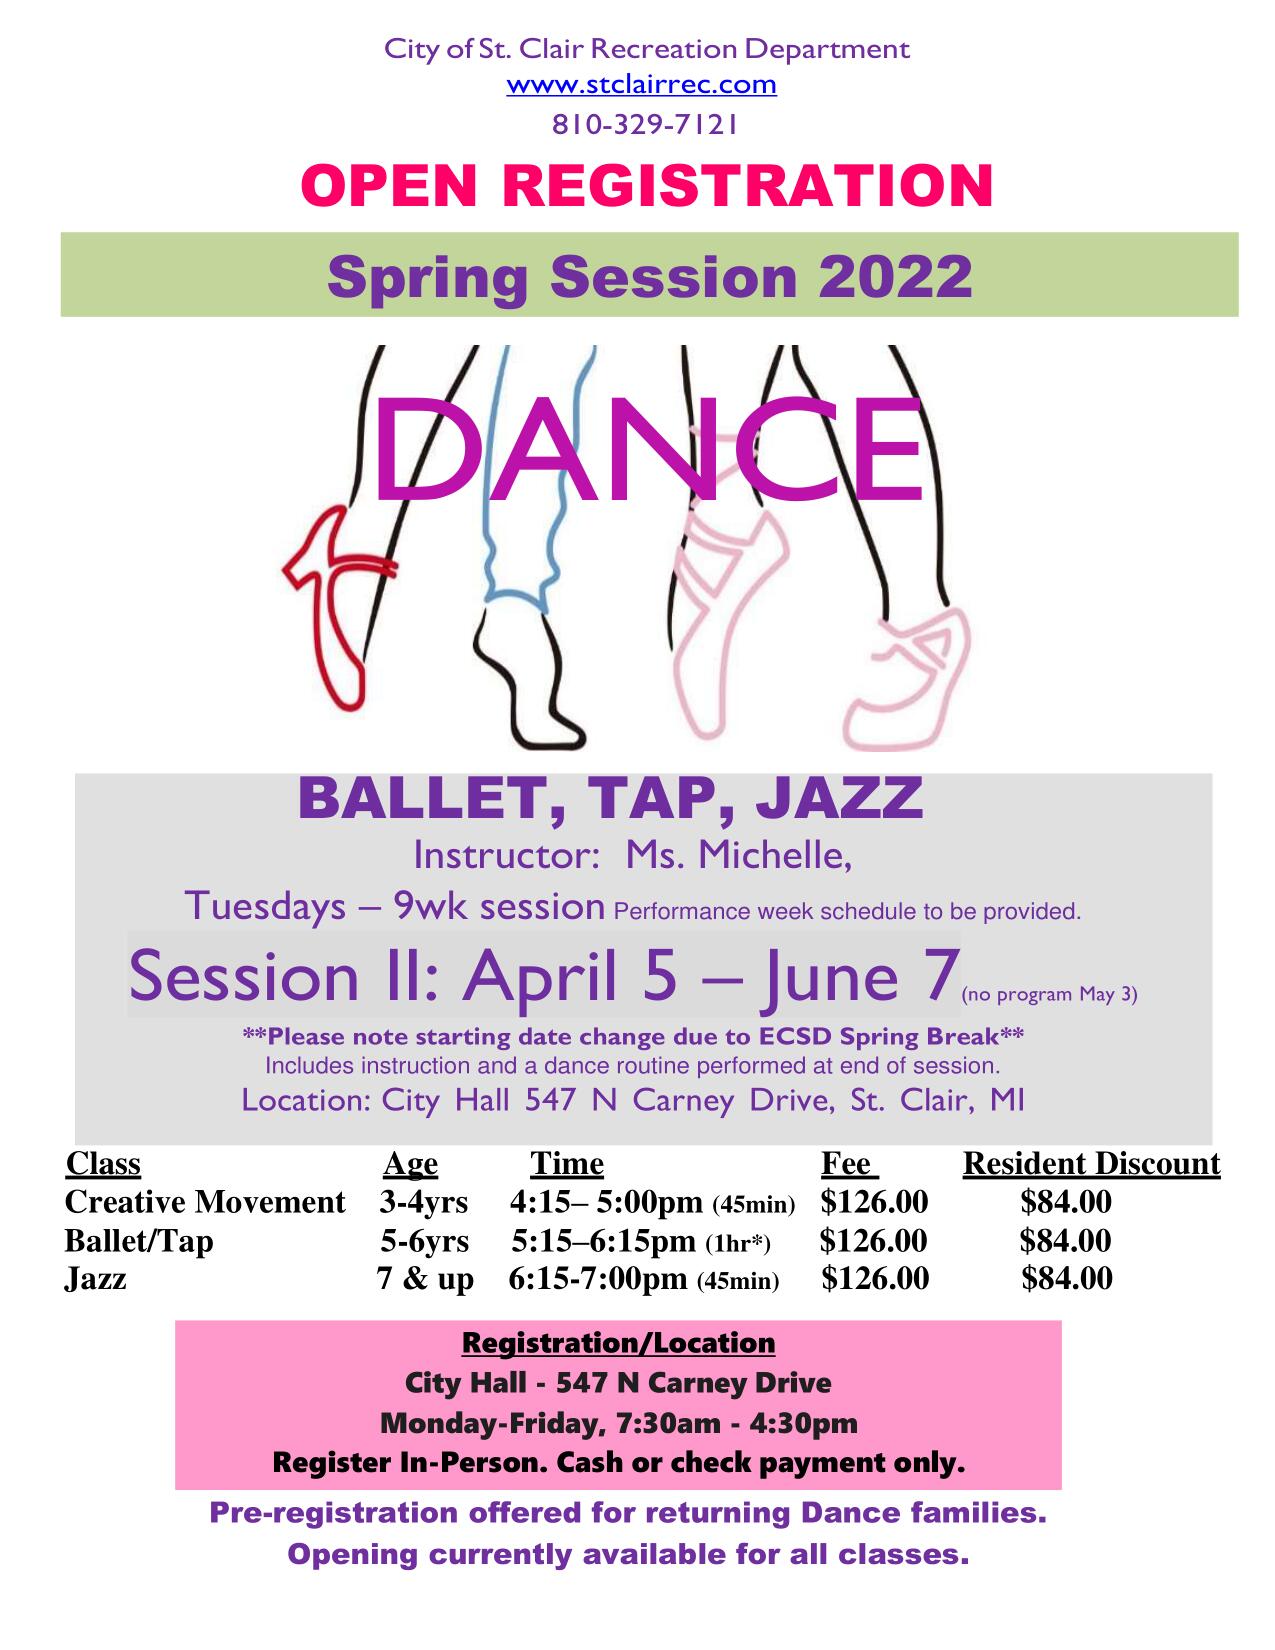 Dance New Regisration Spring